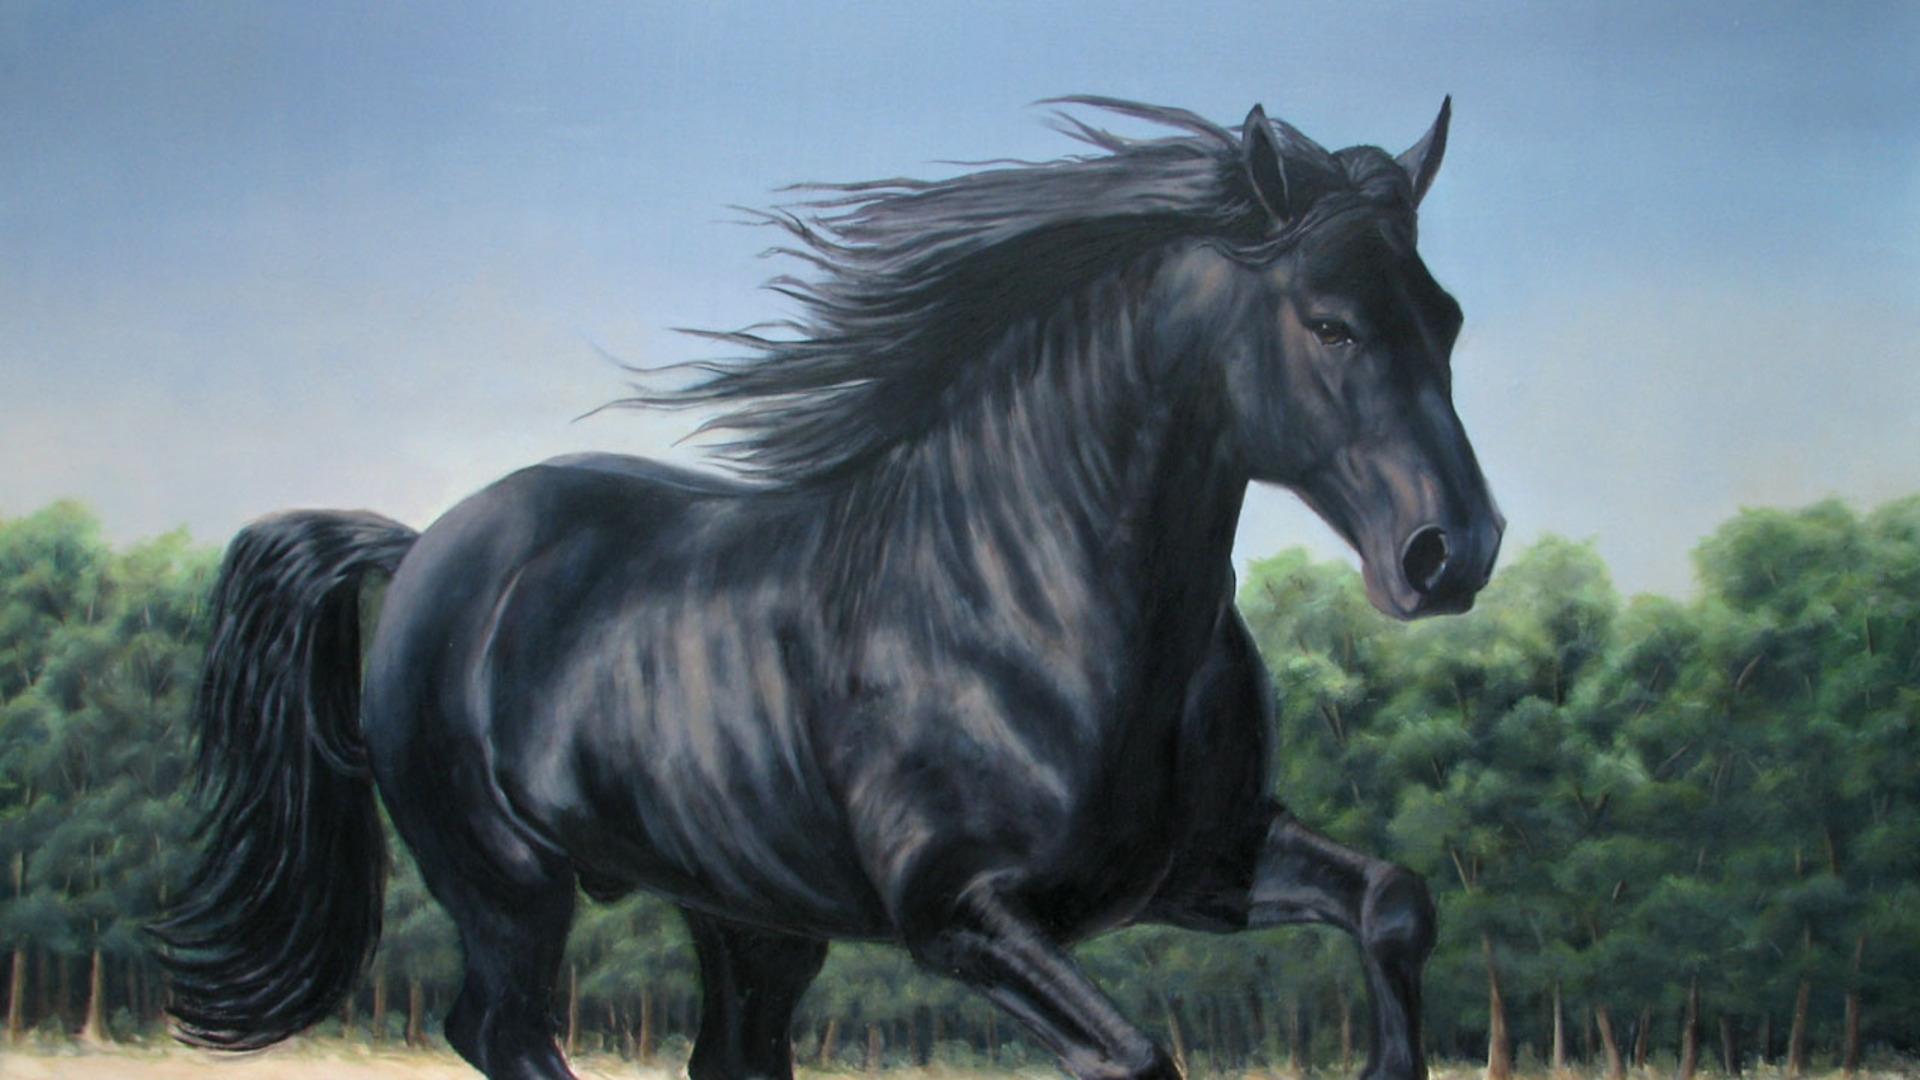 Black Horse HD Wallpaper. Black Horse Image. Cool Wallpaper 6